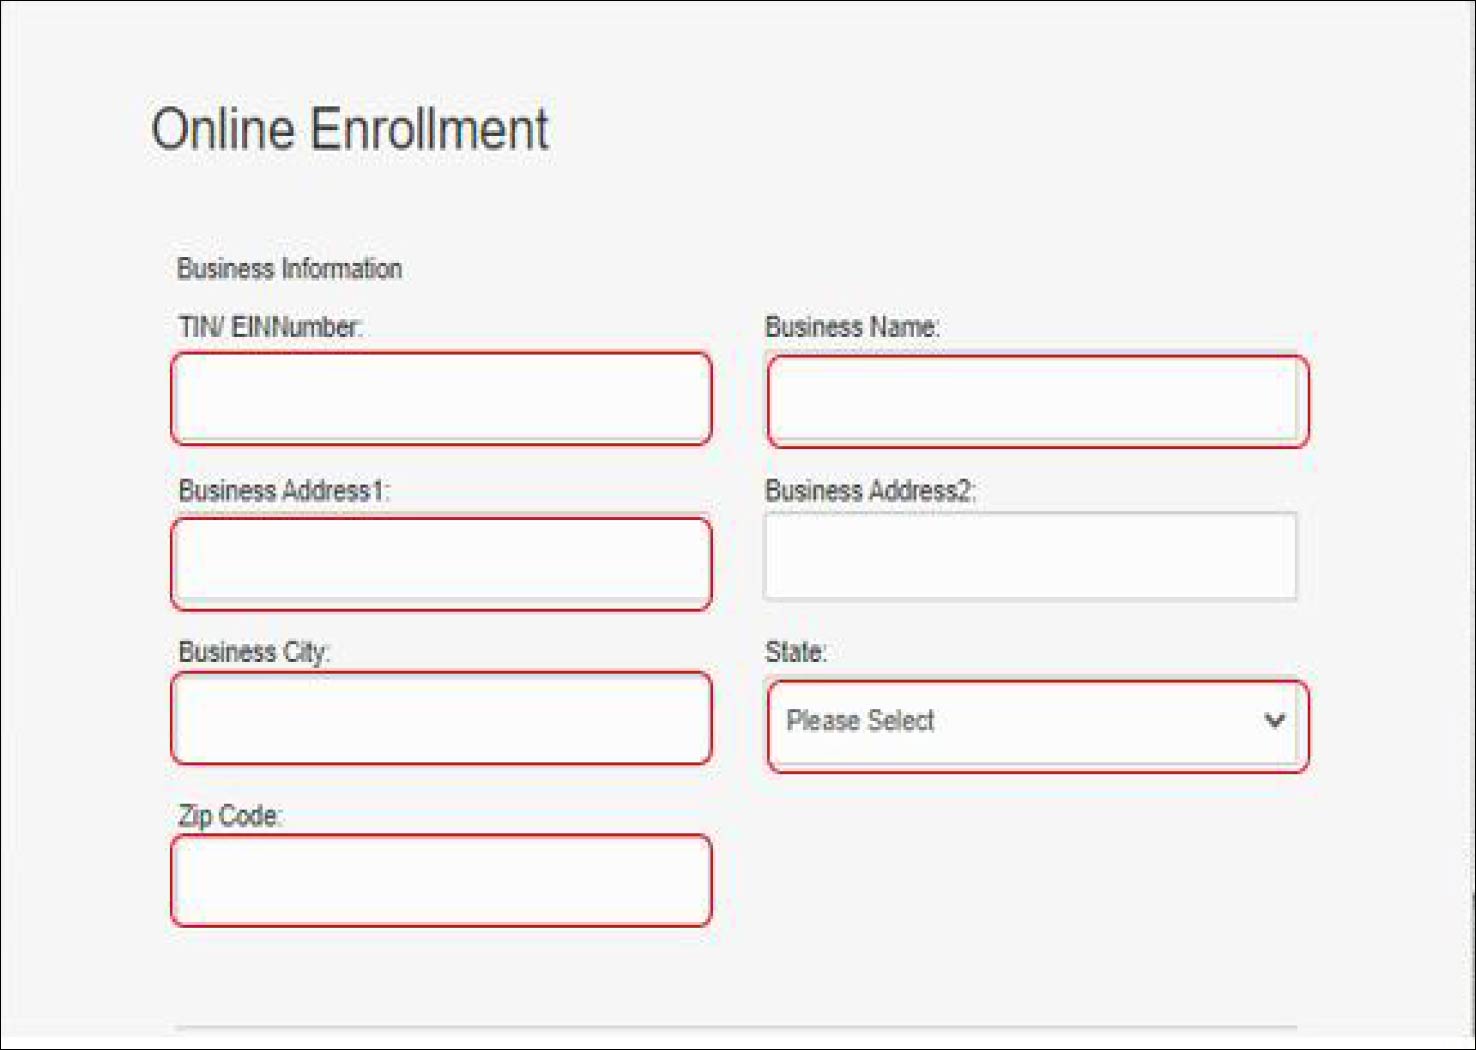 Screenshot of online enrollment form